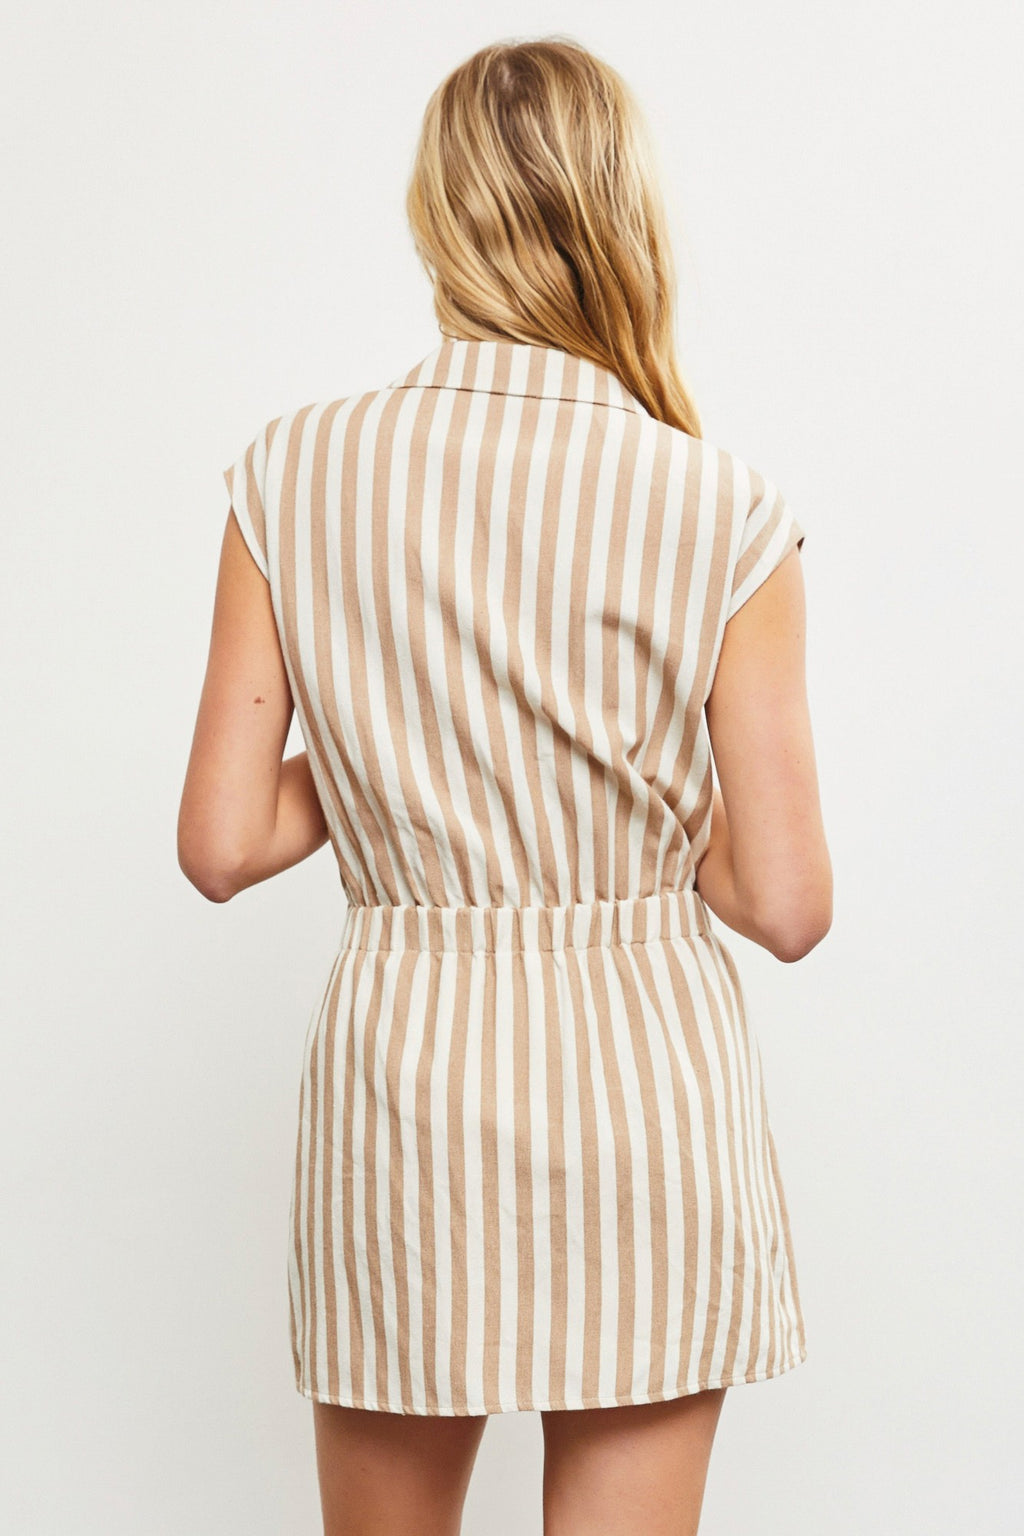 Twist and Shout Striped Romper Dress